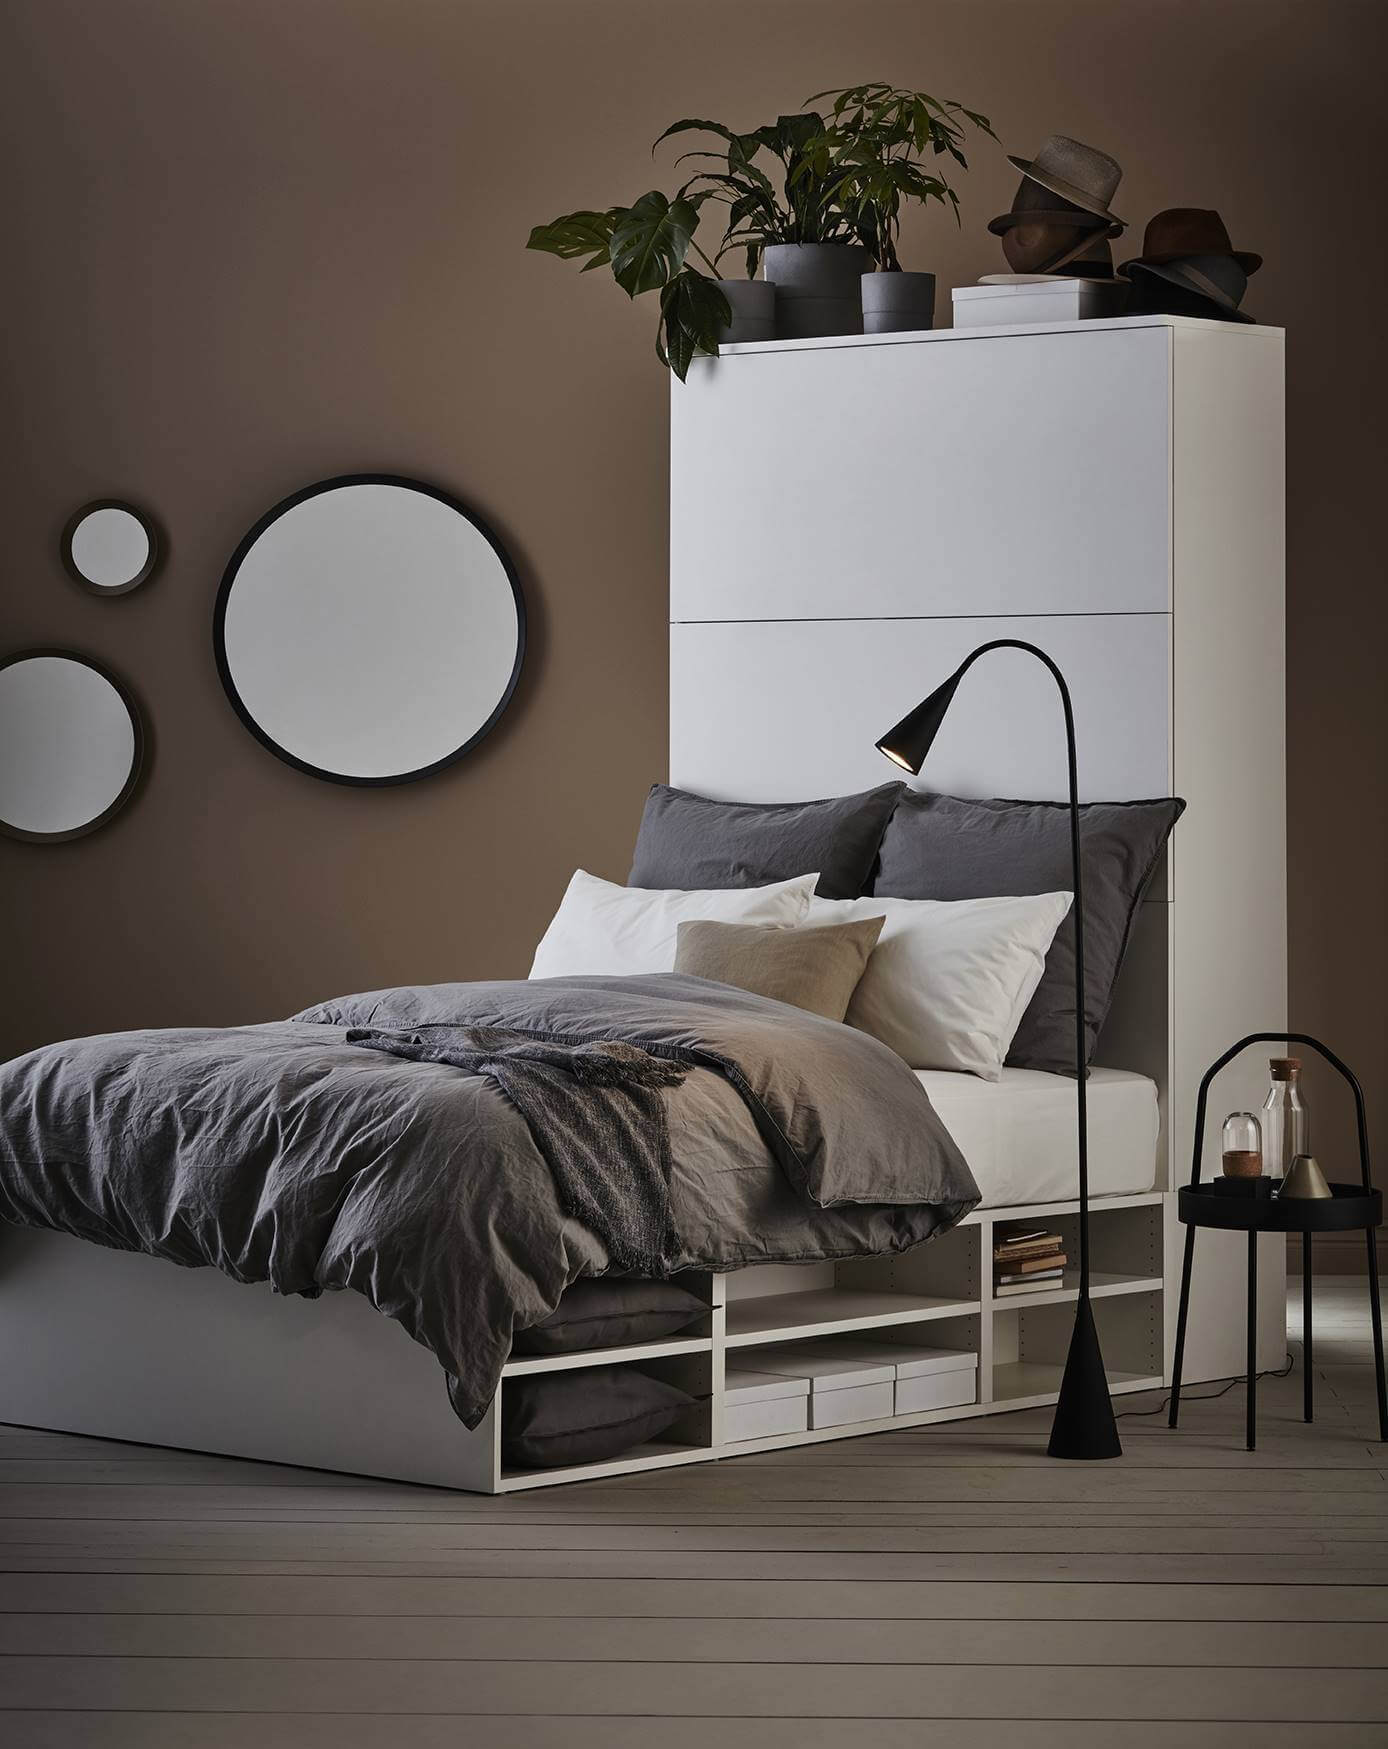 ikea catalog 2020 nordroom41 IKEA Catalog 2020: Get Ready For A Fresh Start